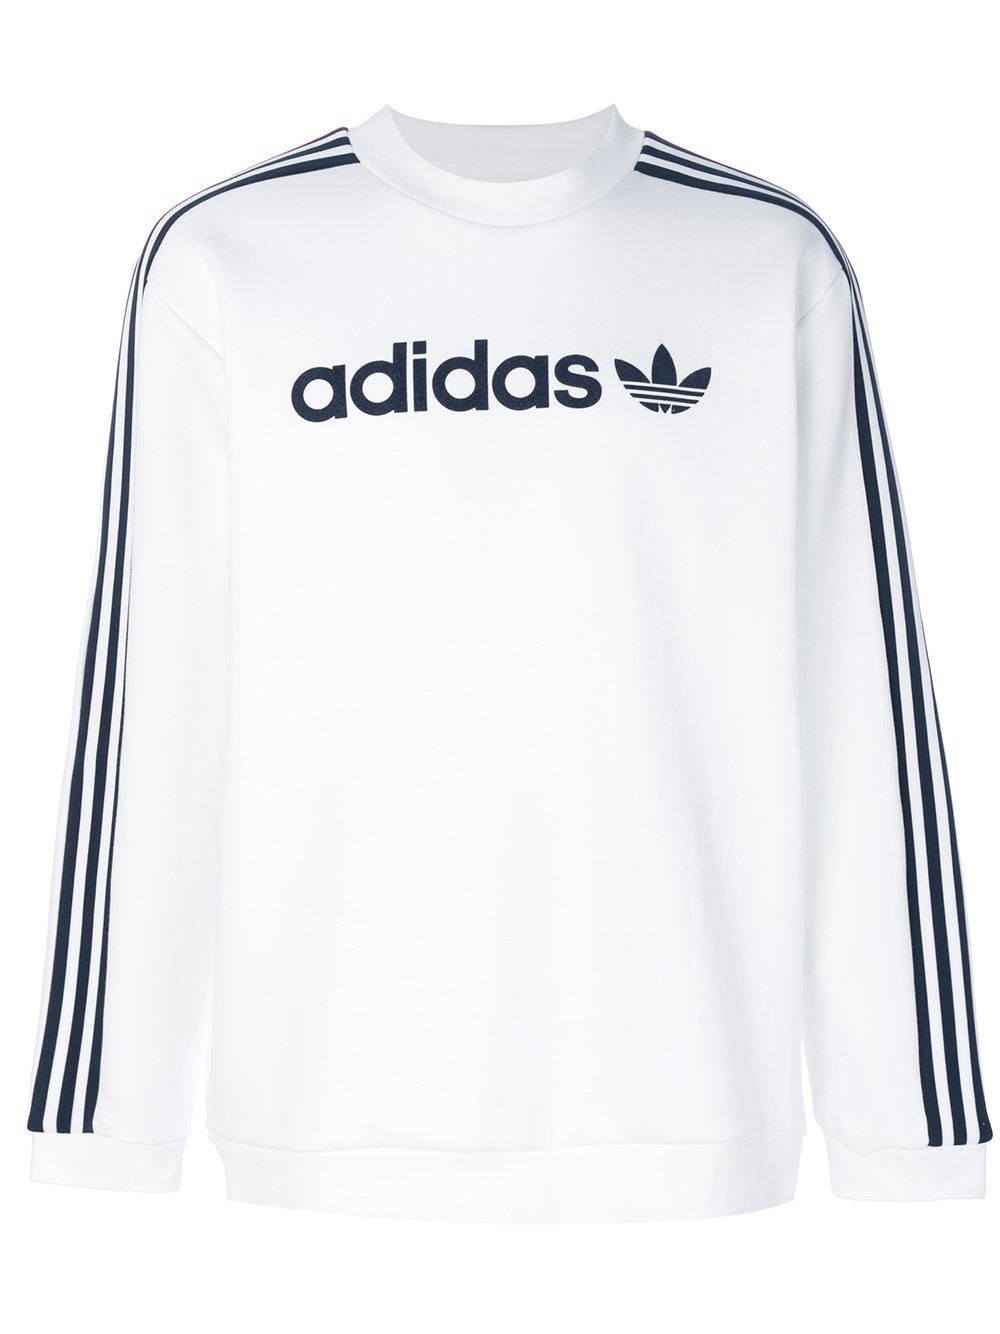 Lyst - adidas Originals Linear Crew Sweatshirt in White for Men